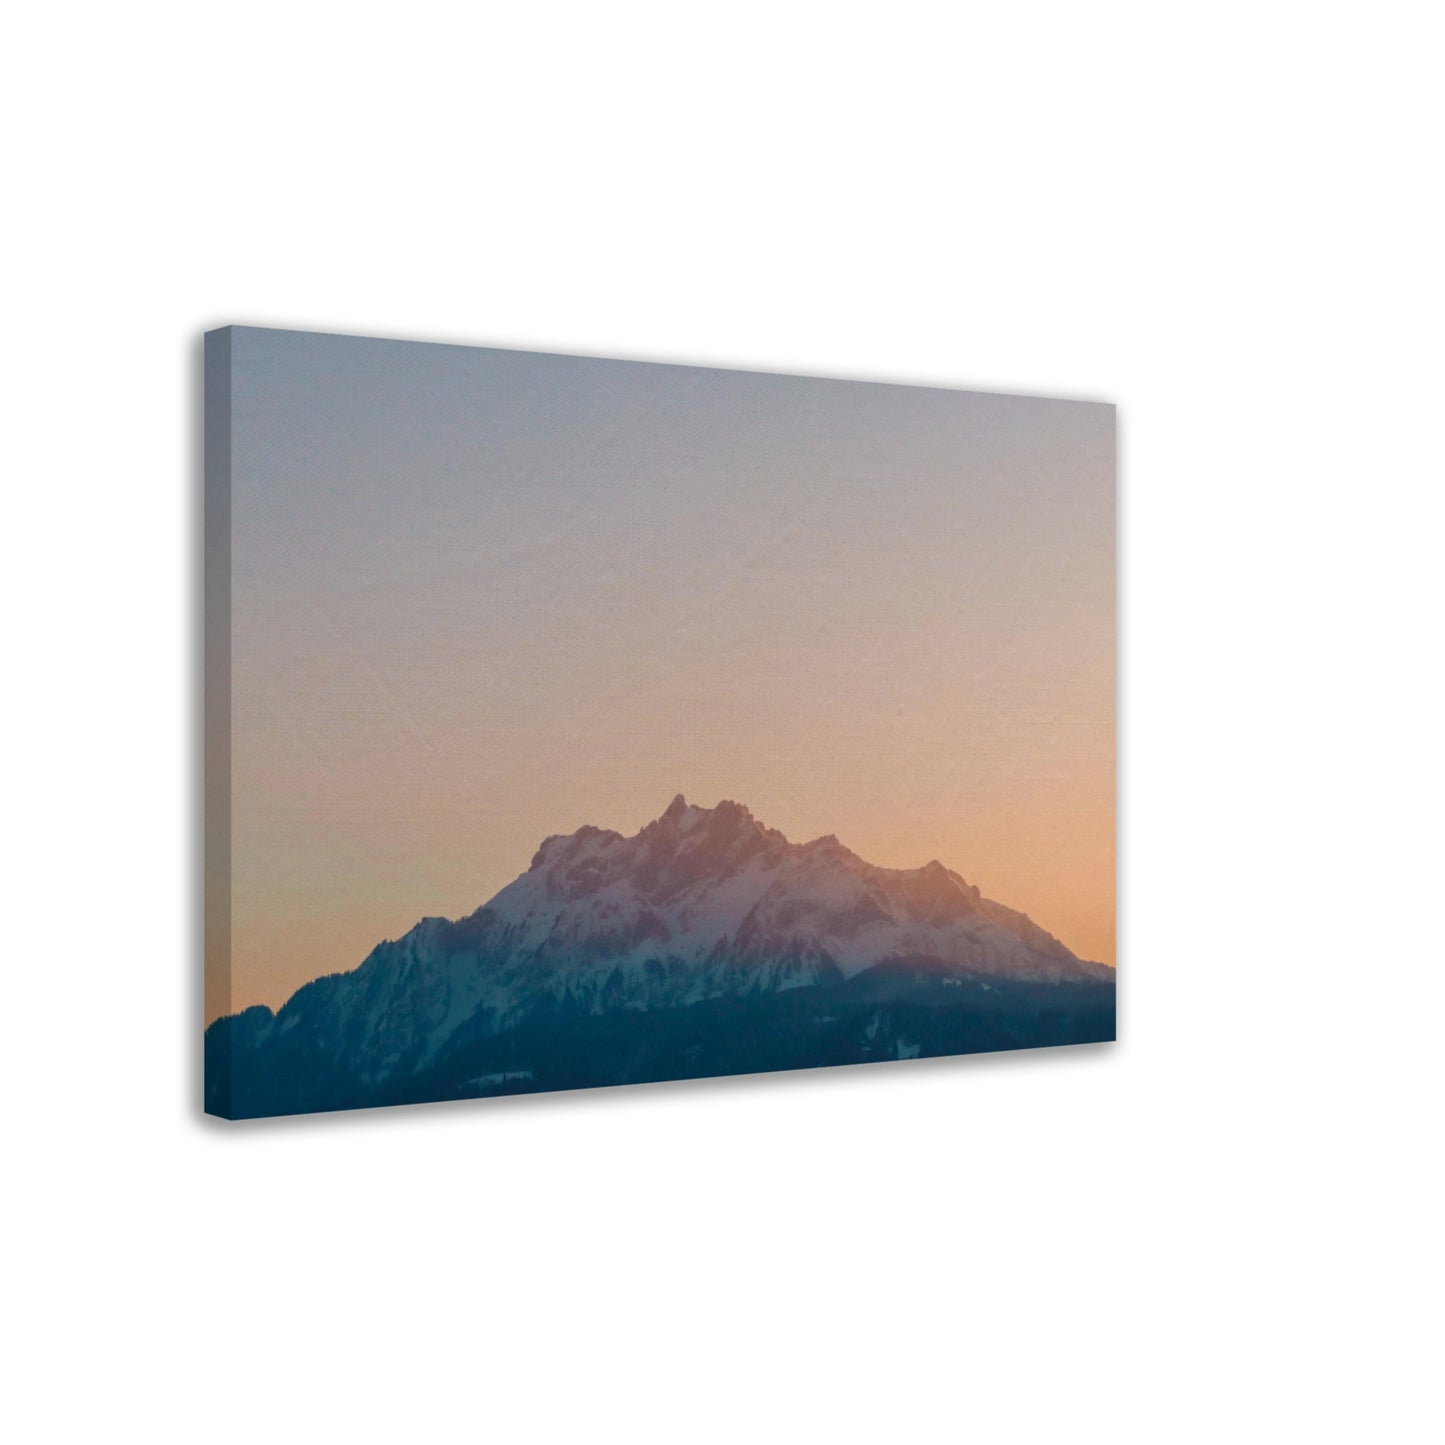 Swiss Alpine magic: Pilatus at sunset - canvas